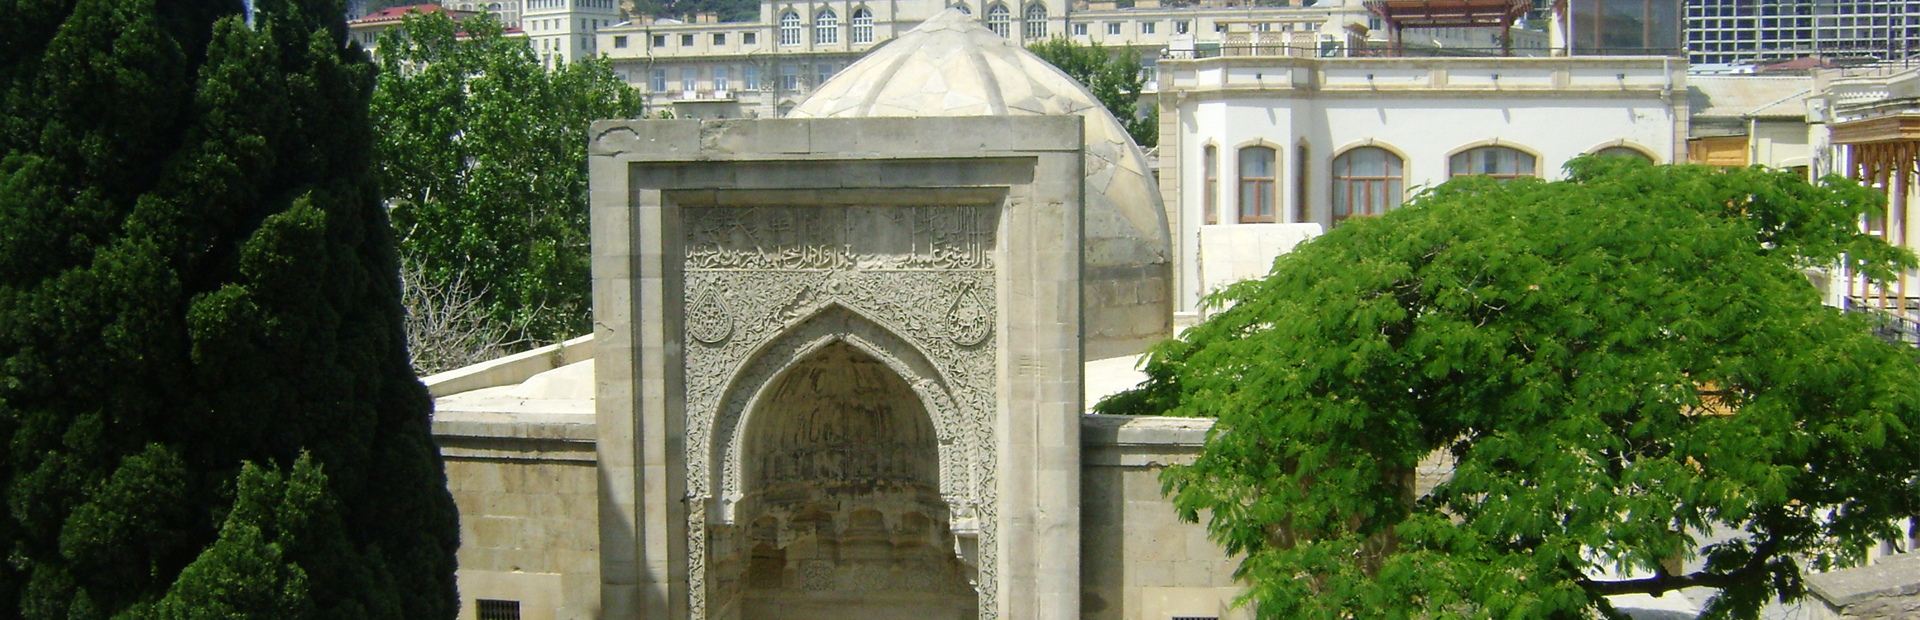 AZTomb_of_khans_shirvanshahs_palace(old-city)_baku_azerbaijanSLIDE